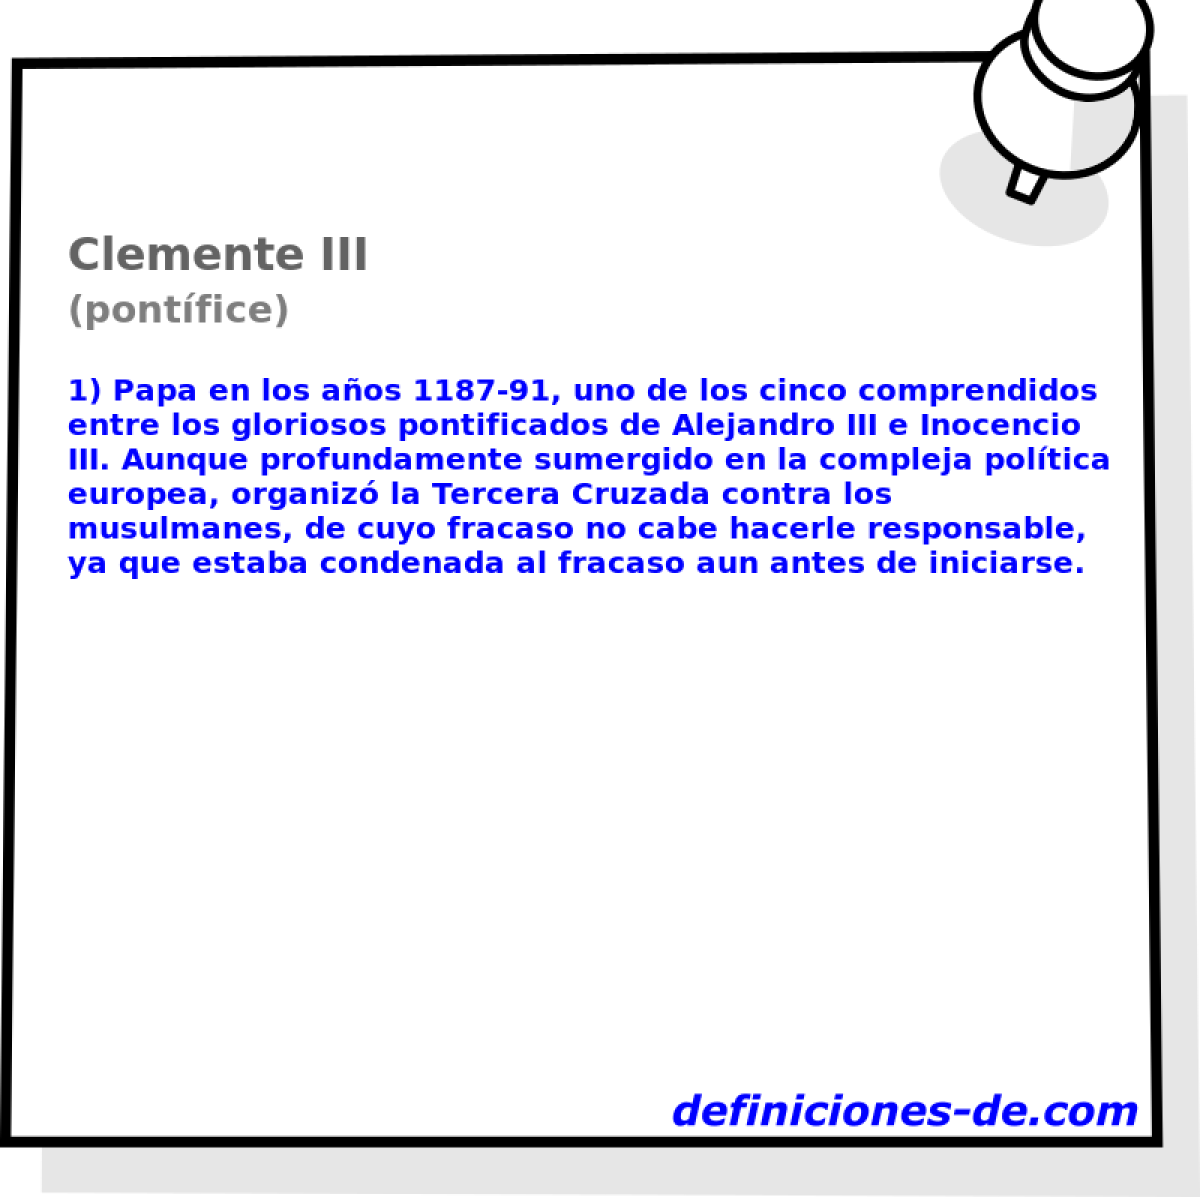 Clemente III (pontfice)